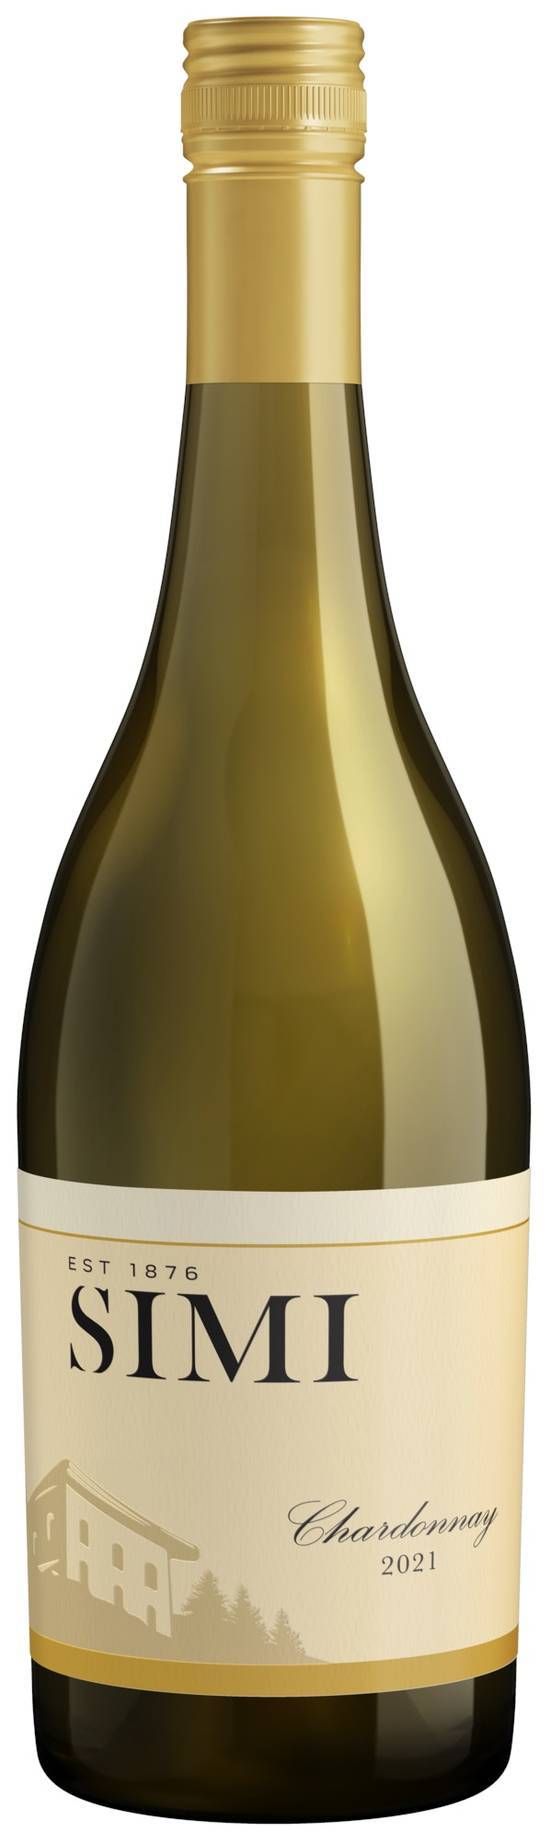 Simi Chardonnay White Wine (750ml bottle)